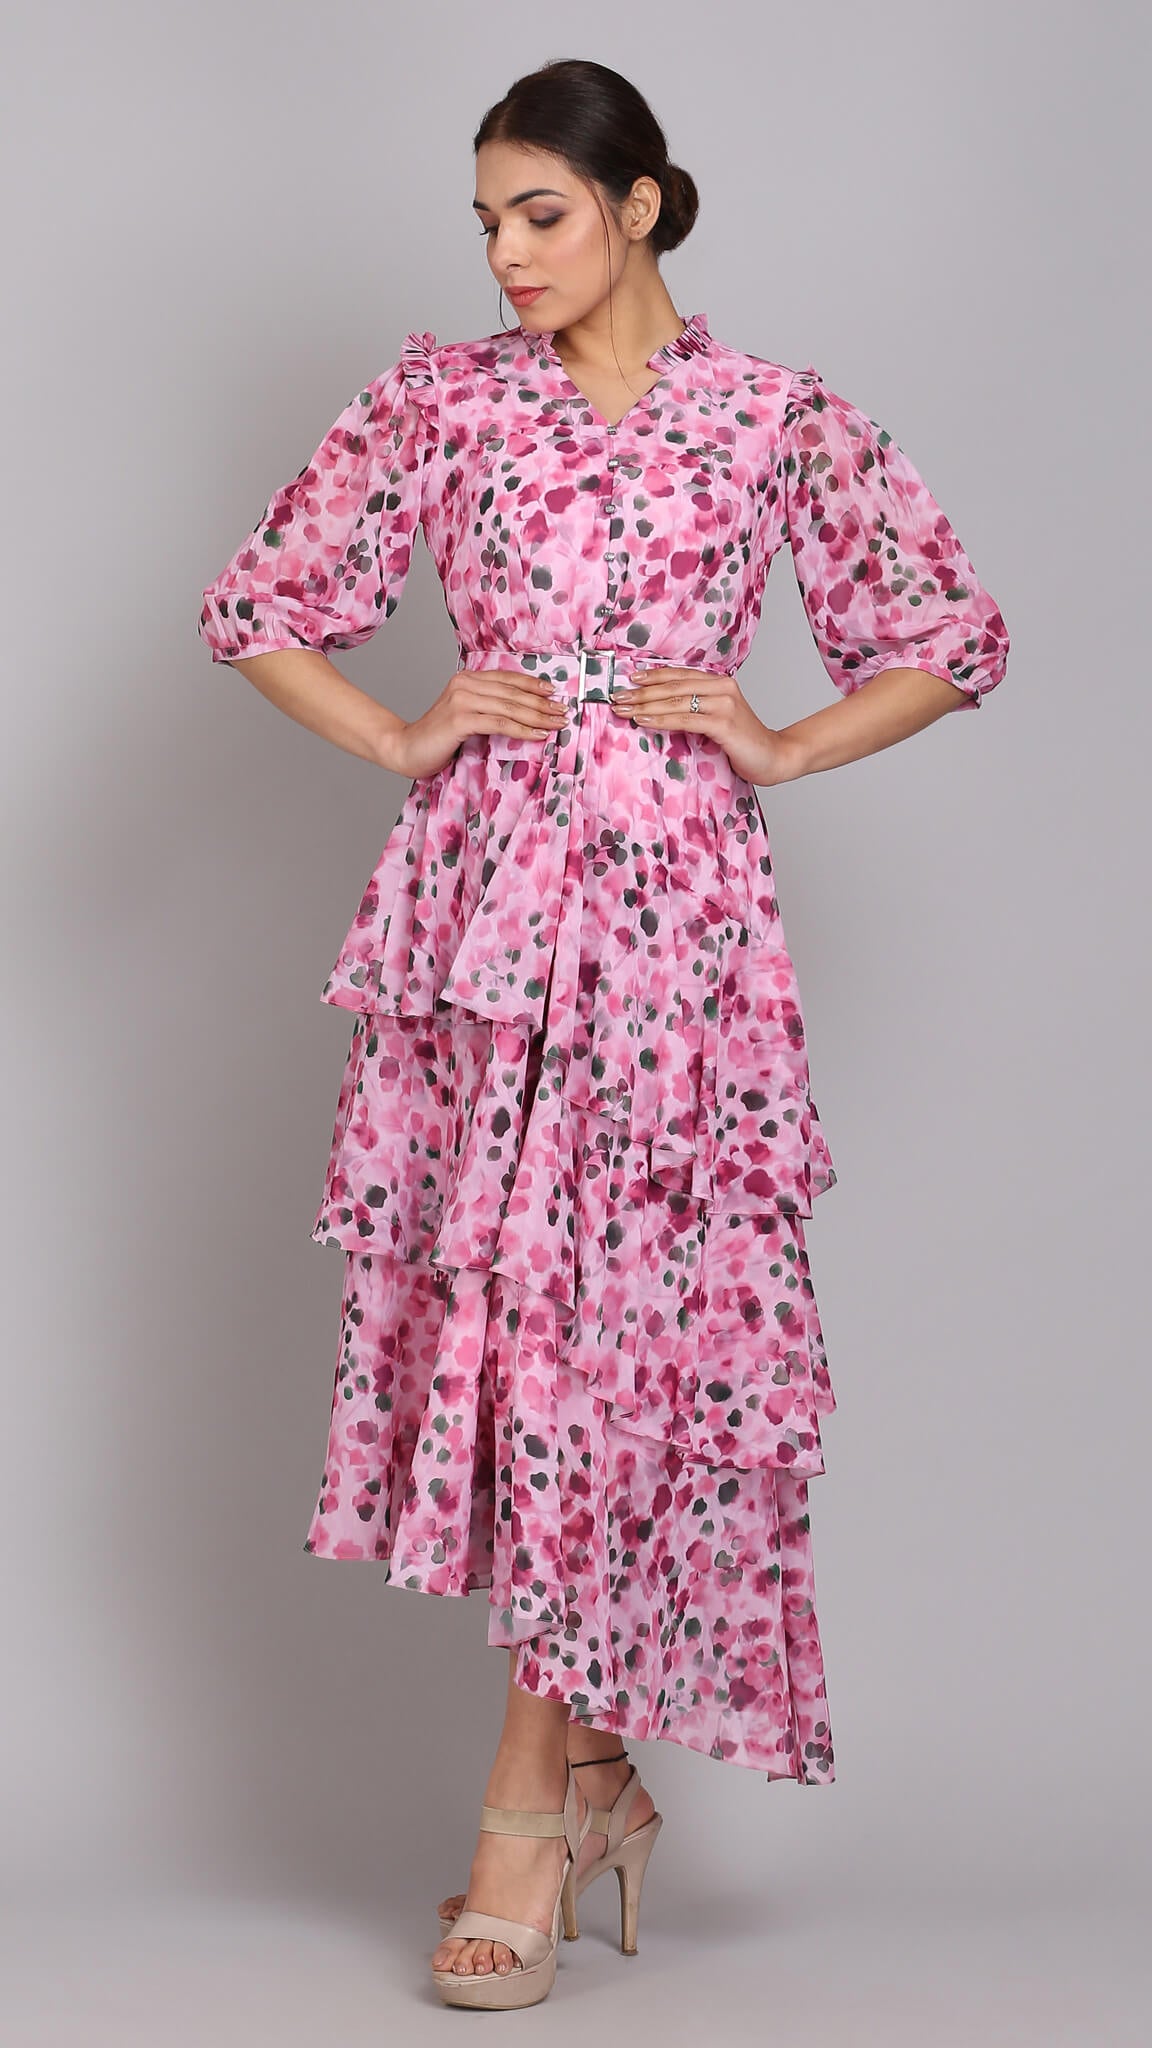 Women Strappy Floral Maxi Dress Ladies Summer Beach Evening Party Boho Dress  | eBay